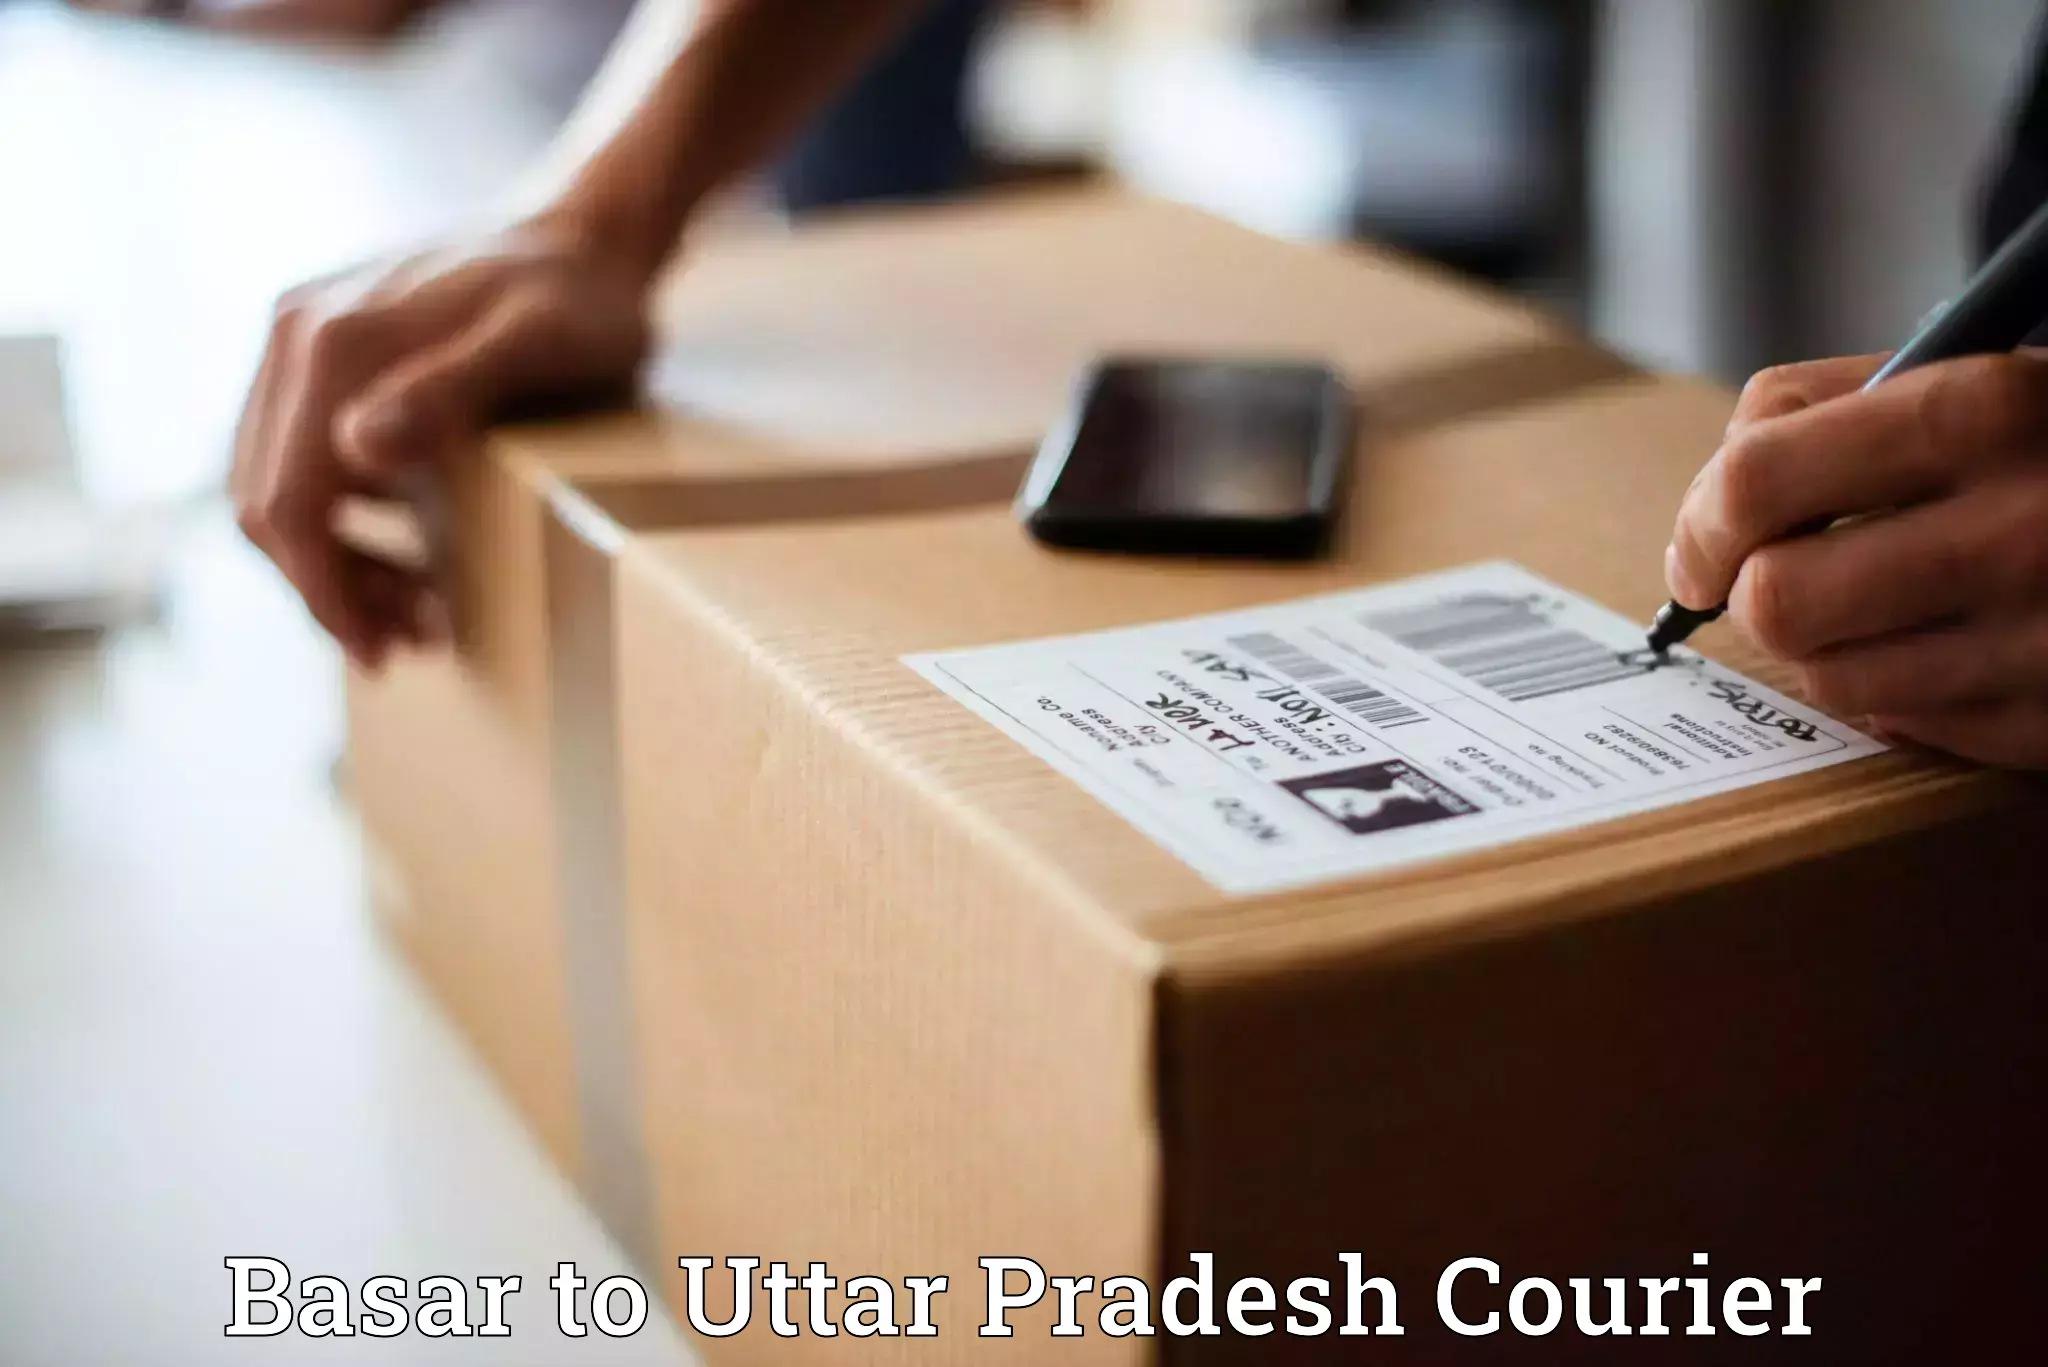 Next-generation courier services Basar to Uttar Pradesh